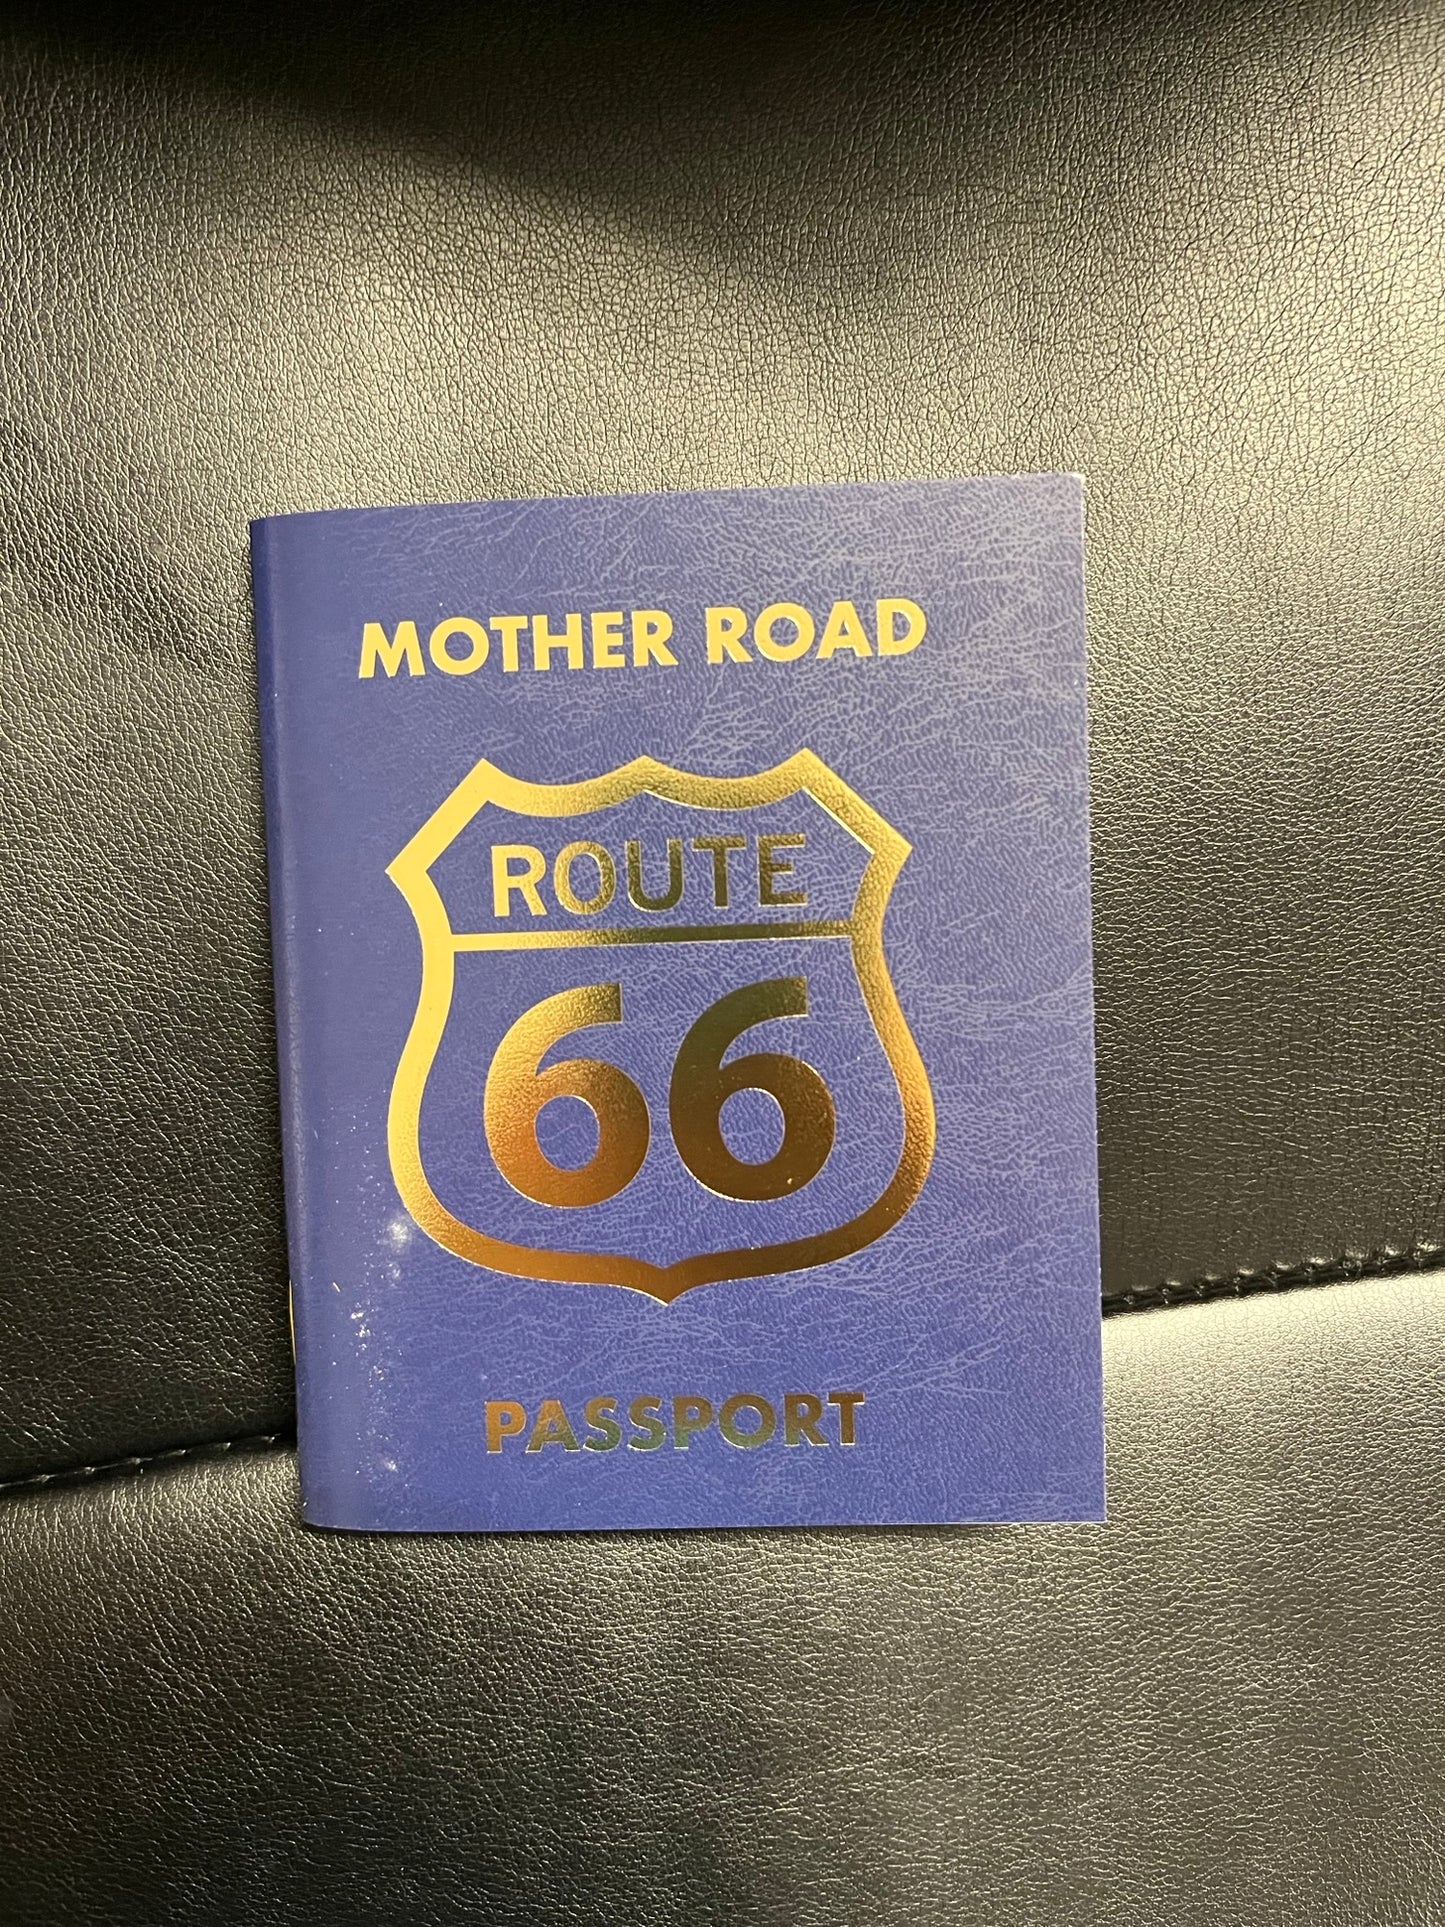 Route 66 passport book